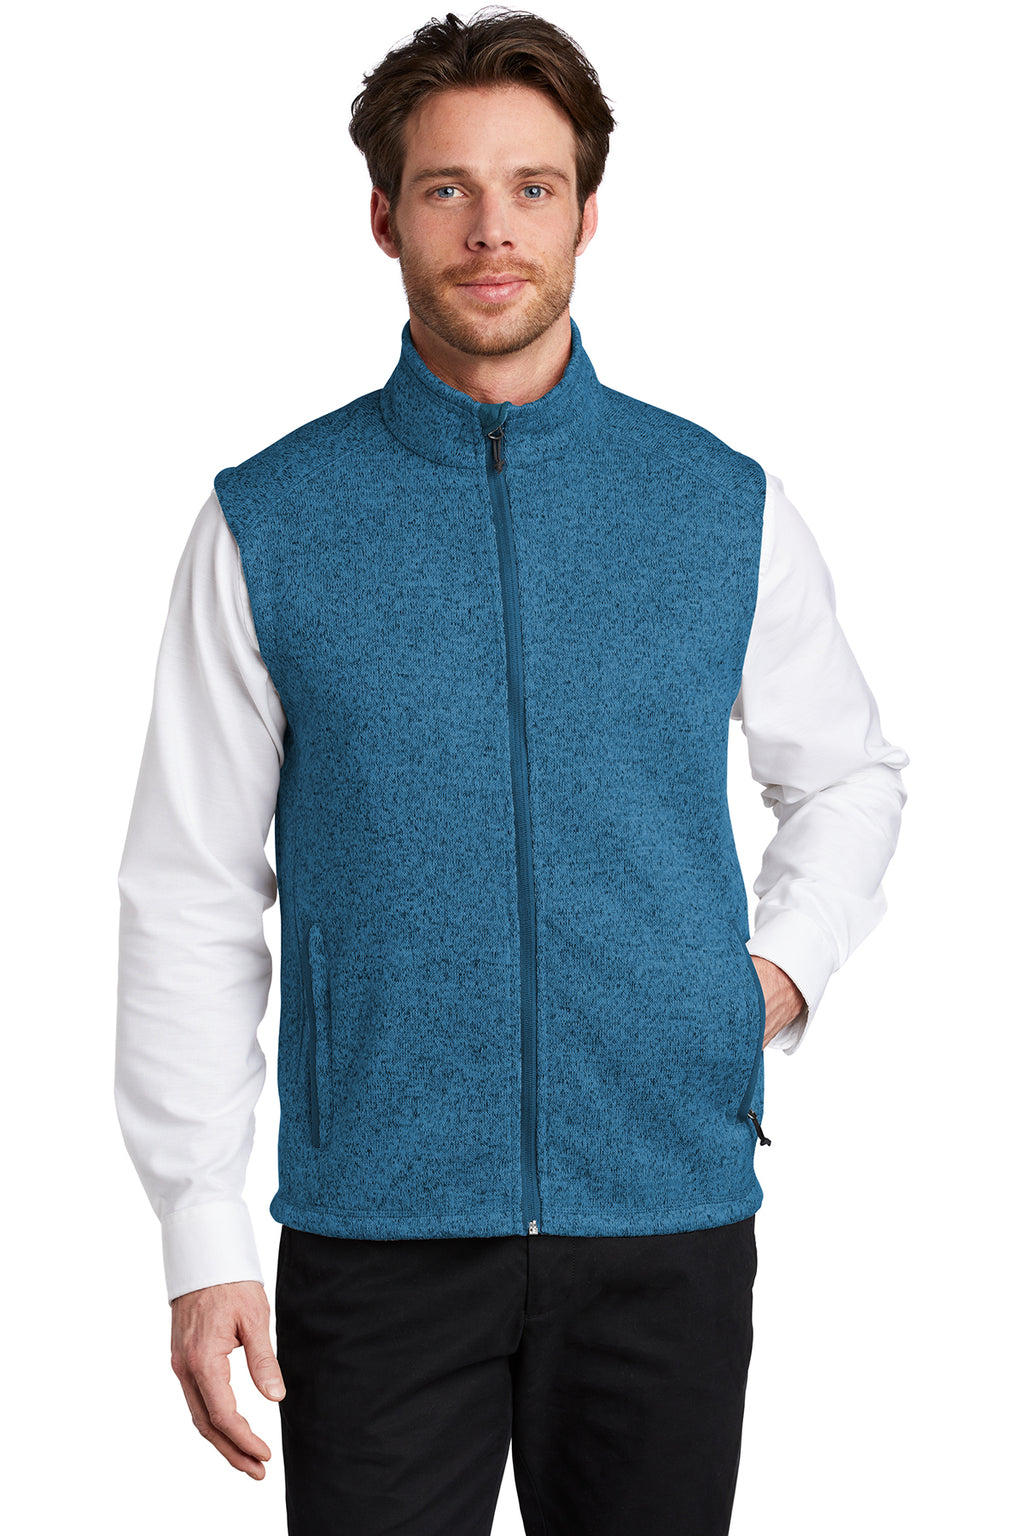 L236-Port Authority Ladies Sweater Fleece Vest